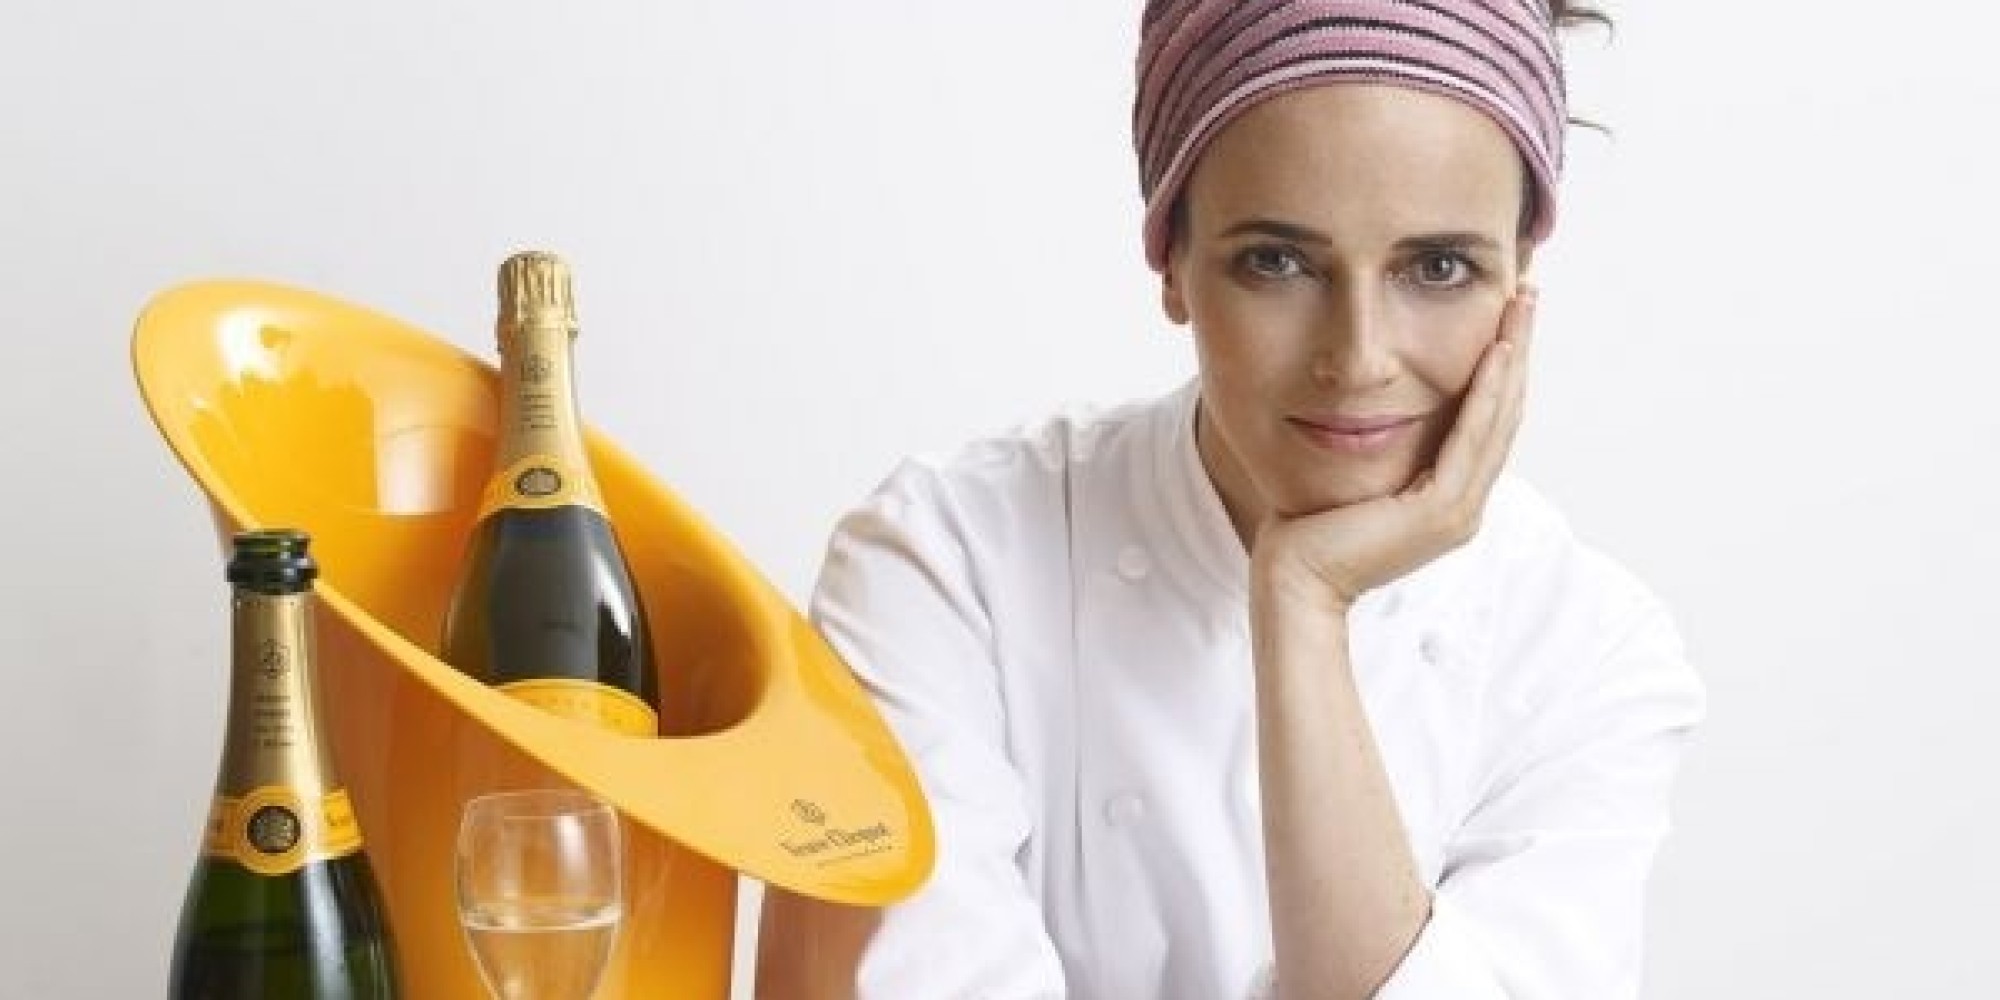 World's Best Female Chef Helena Rizzo